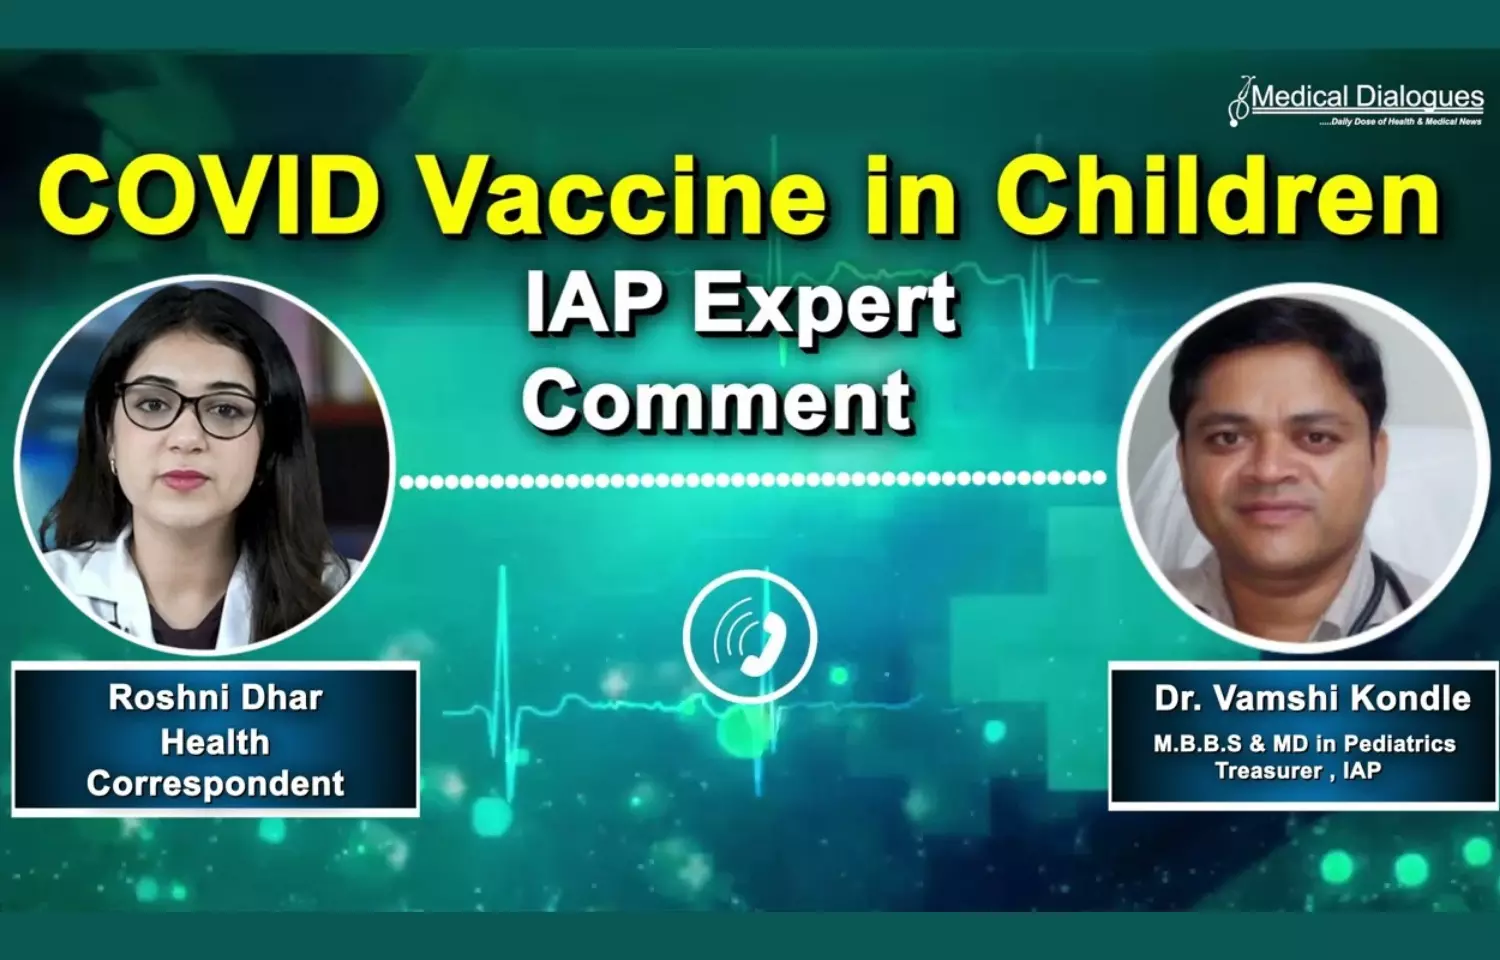 COVID vaccine for children: IAP expert comment